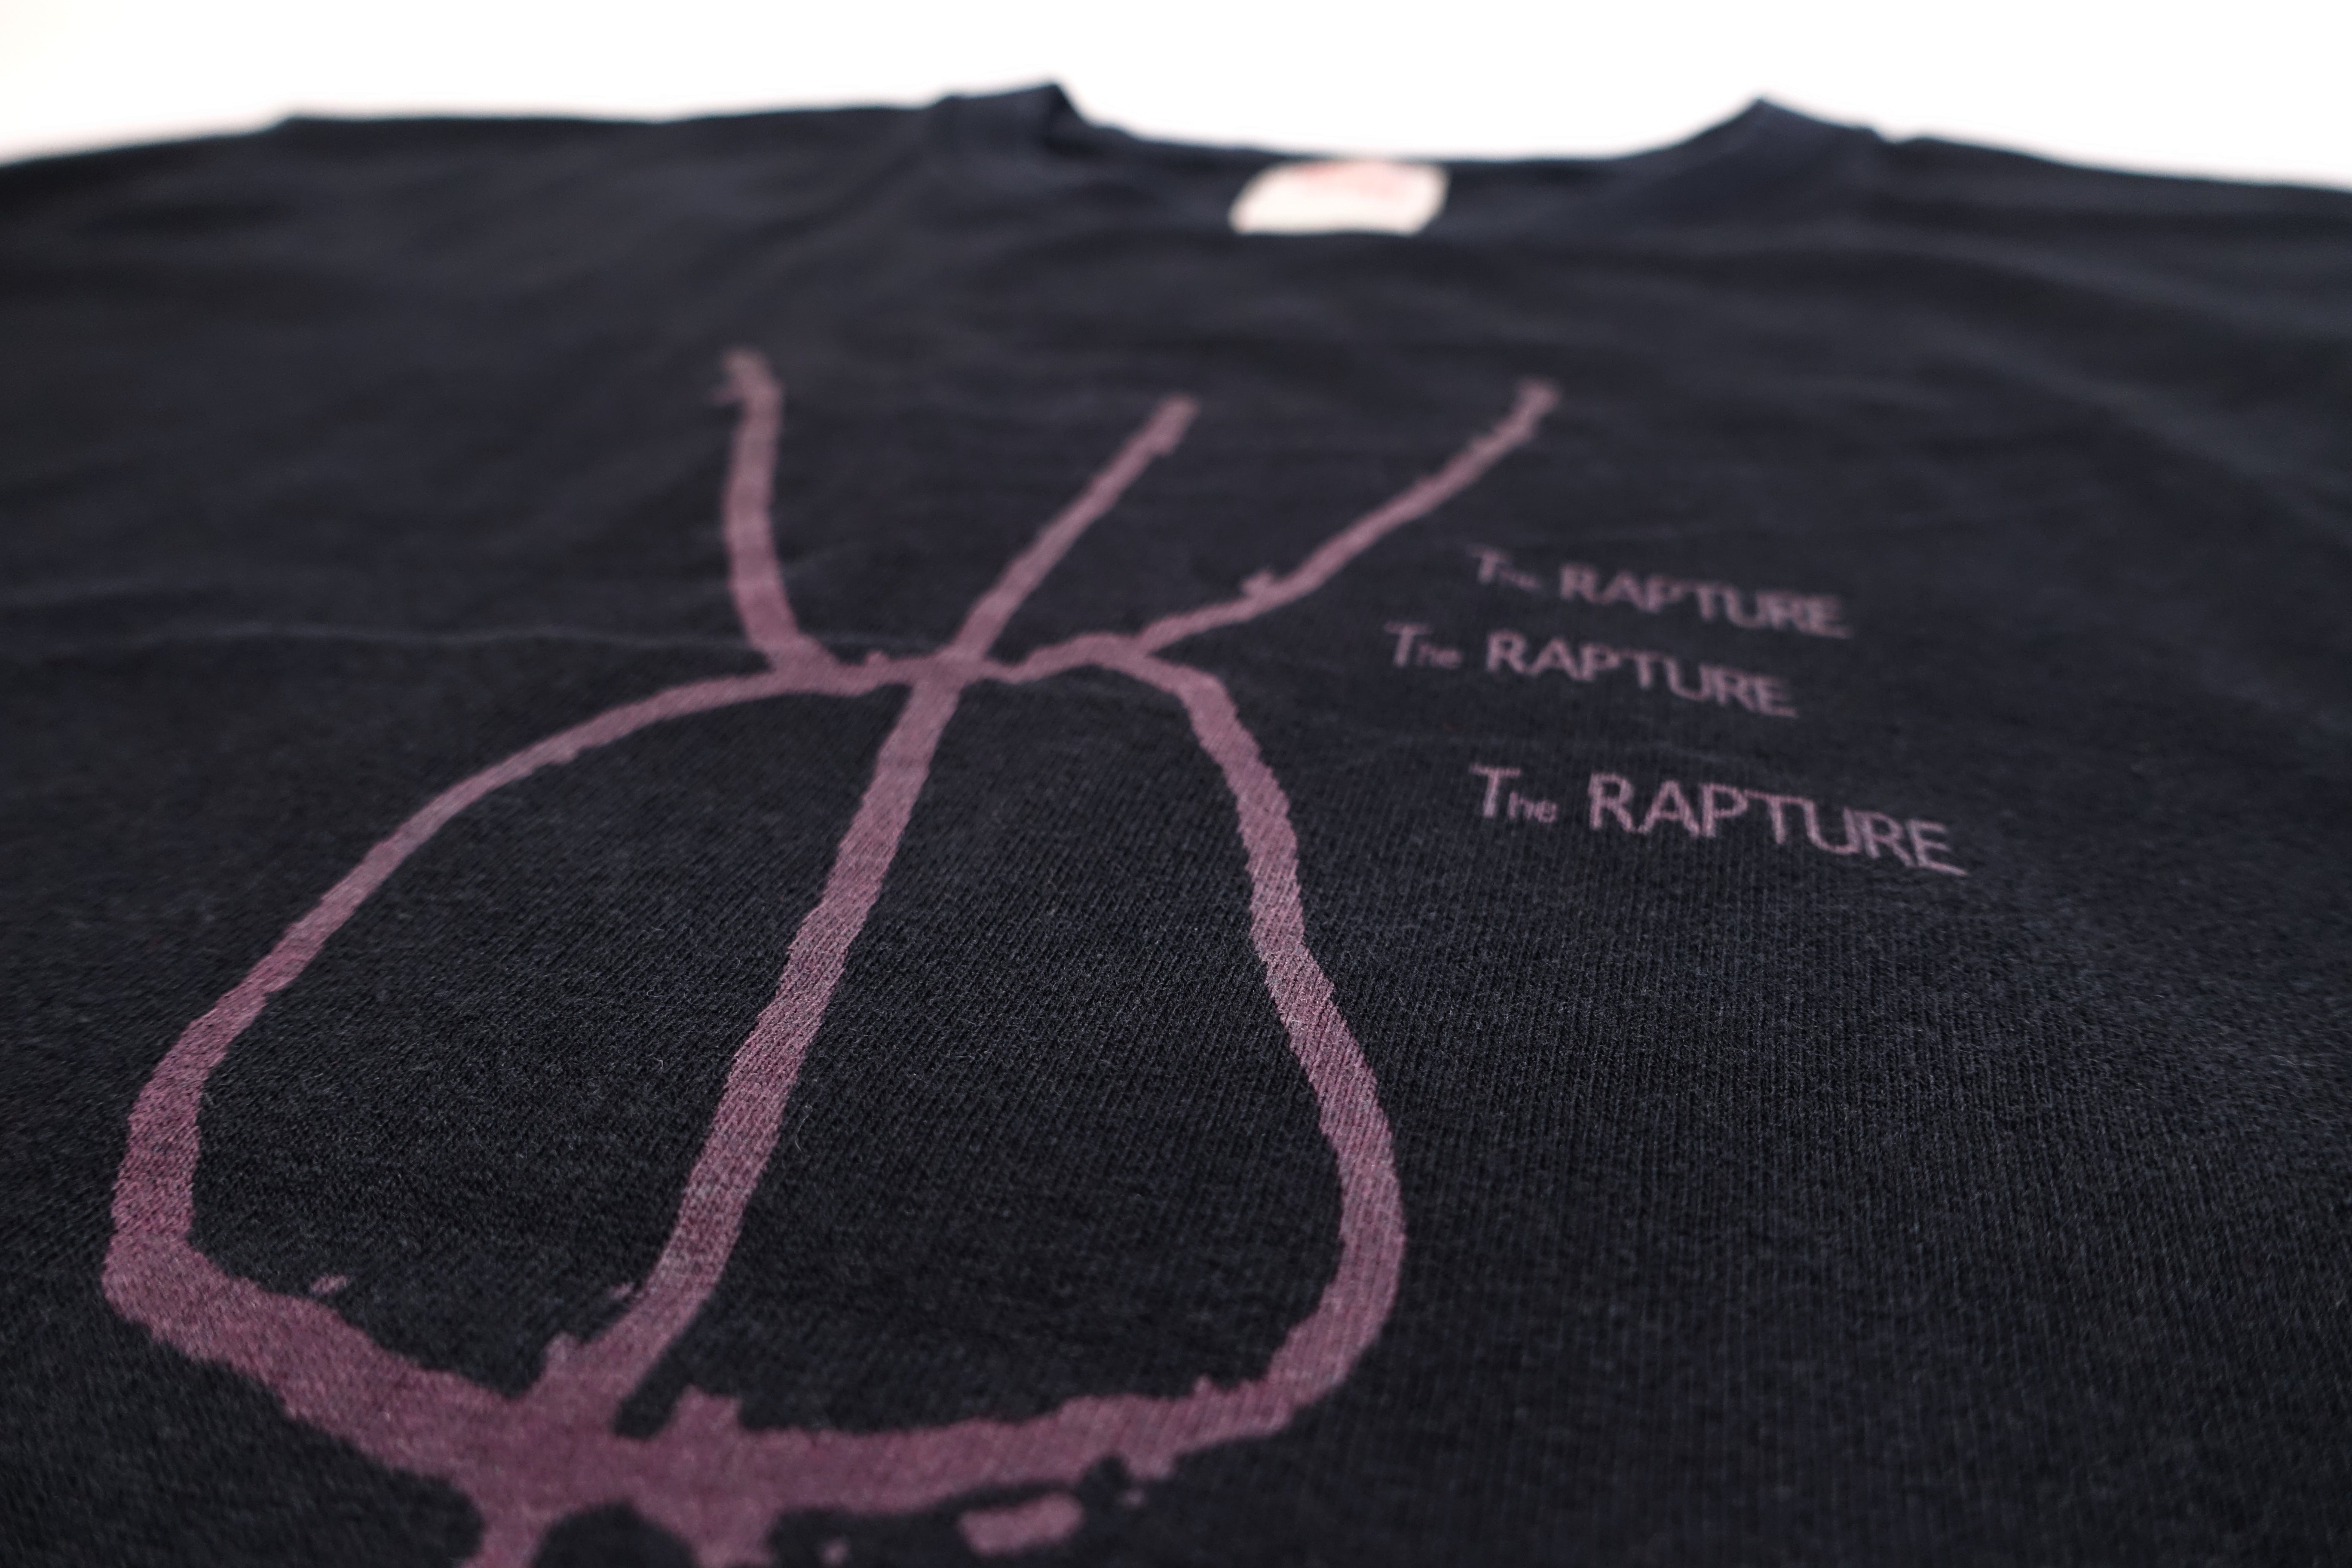 the Rapture - Mirror Double R 1999 Tour Shirt Size Large